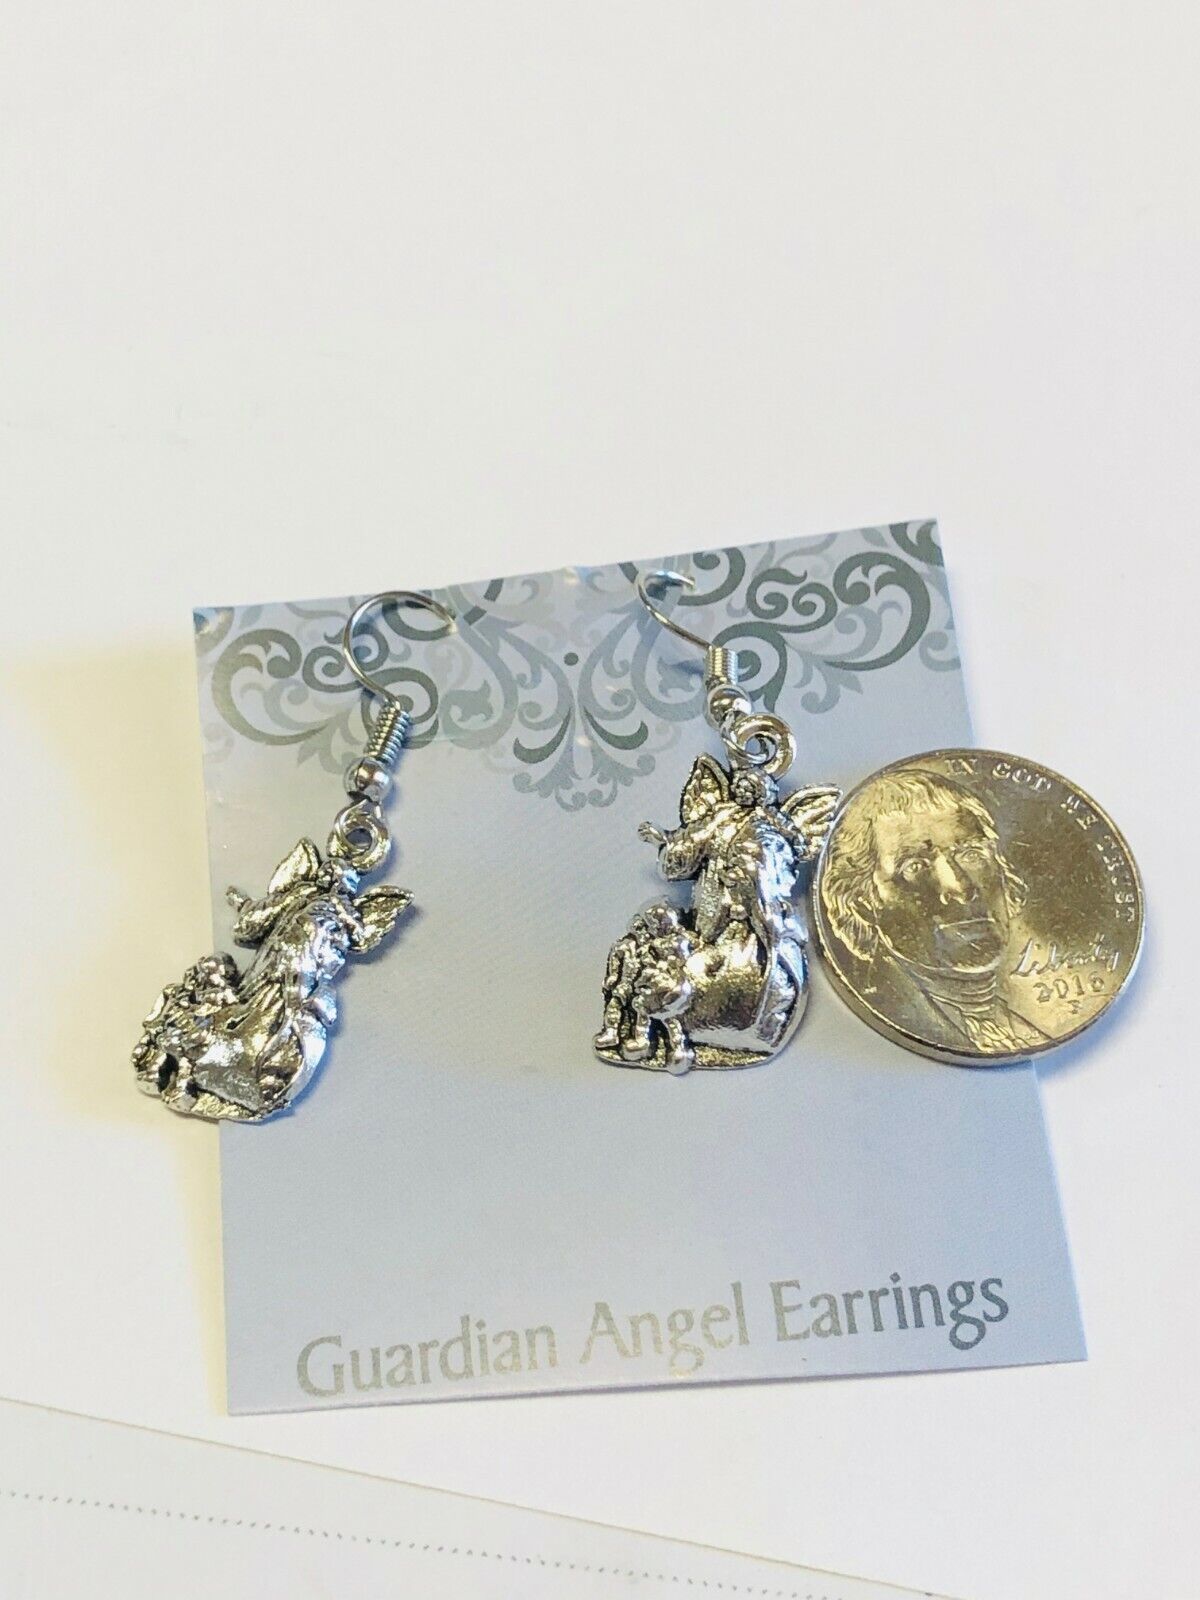 Guardian Angel Earrings, Silvertone, New - Bob and Penny Lord